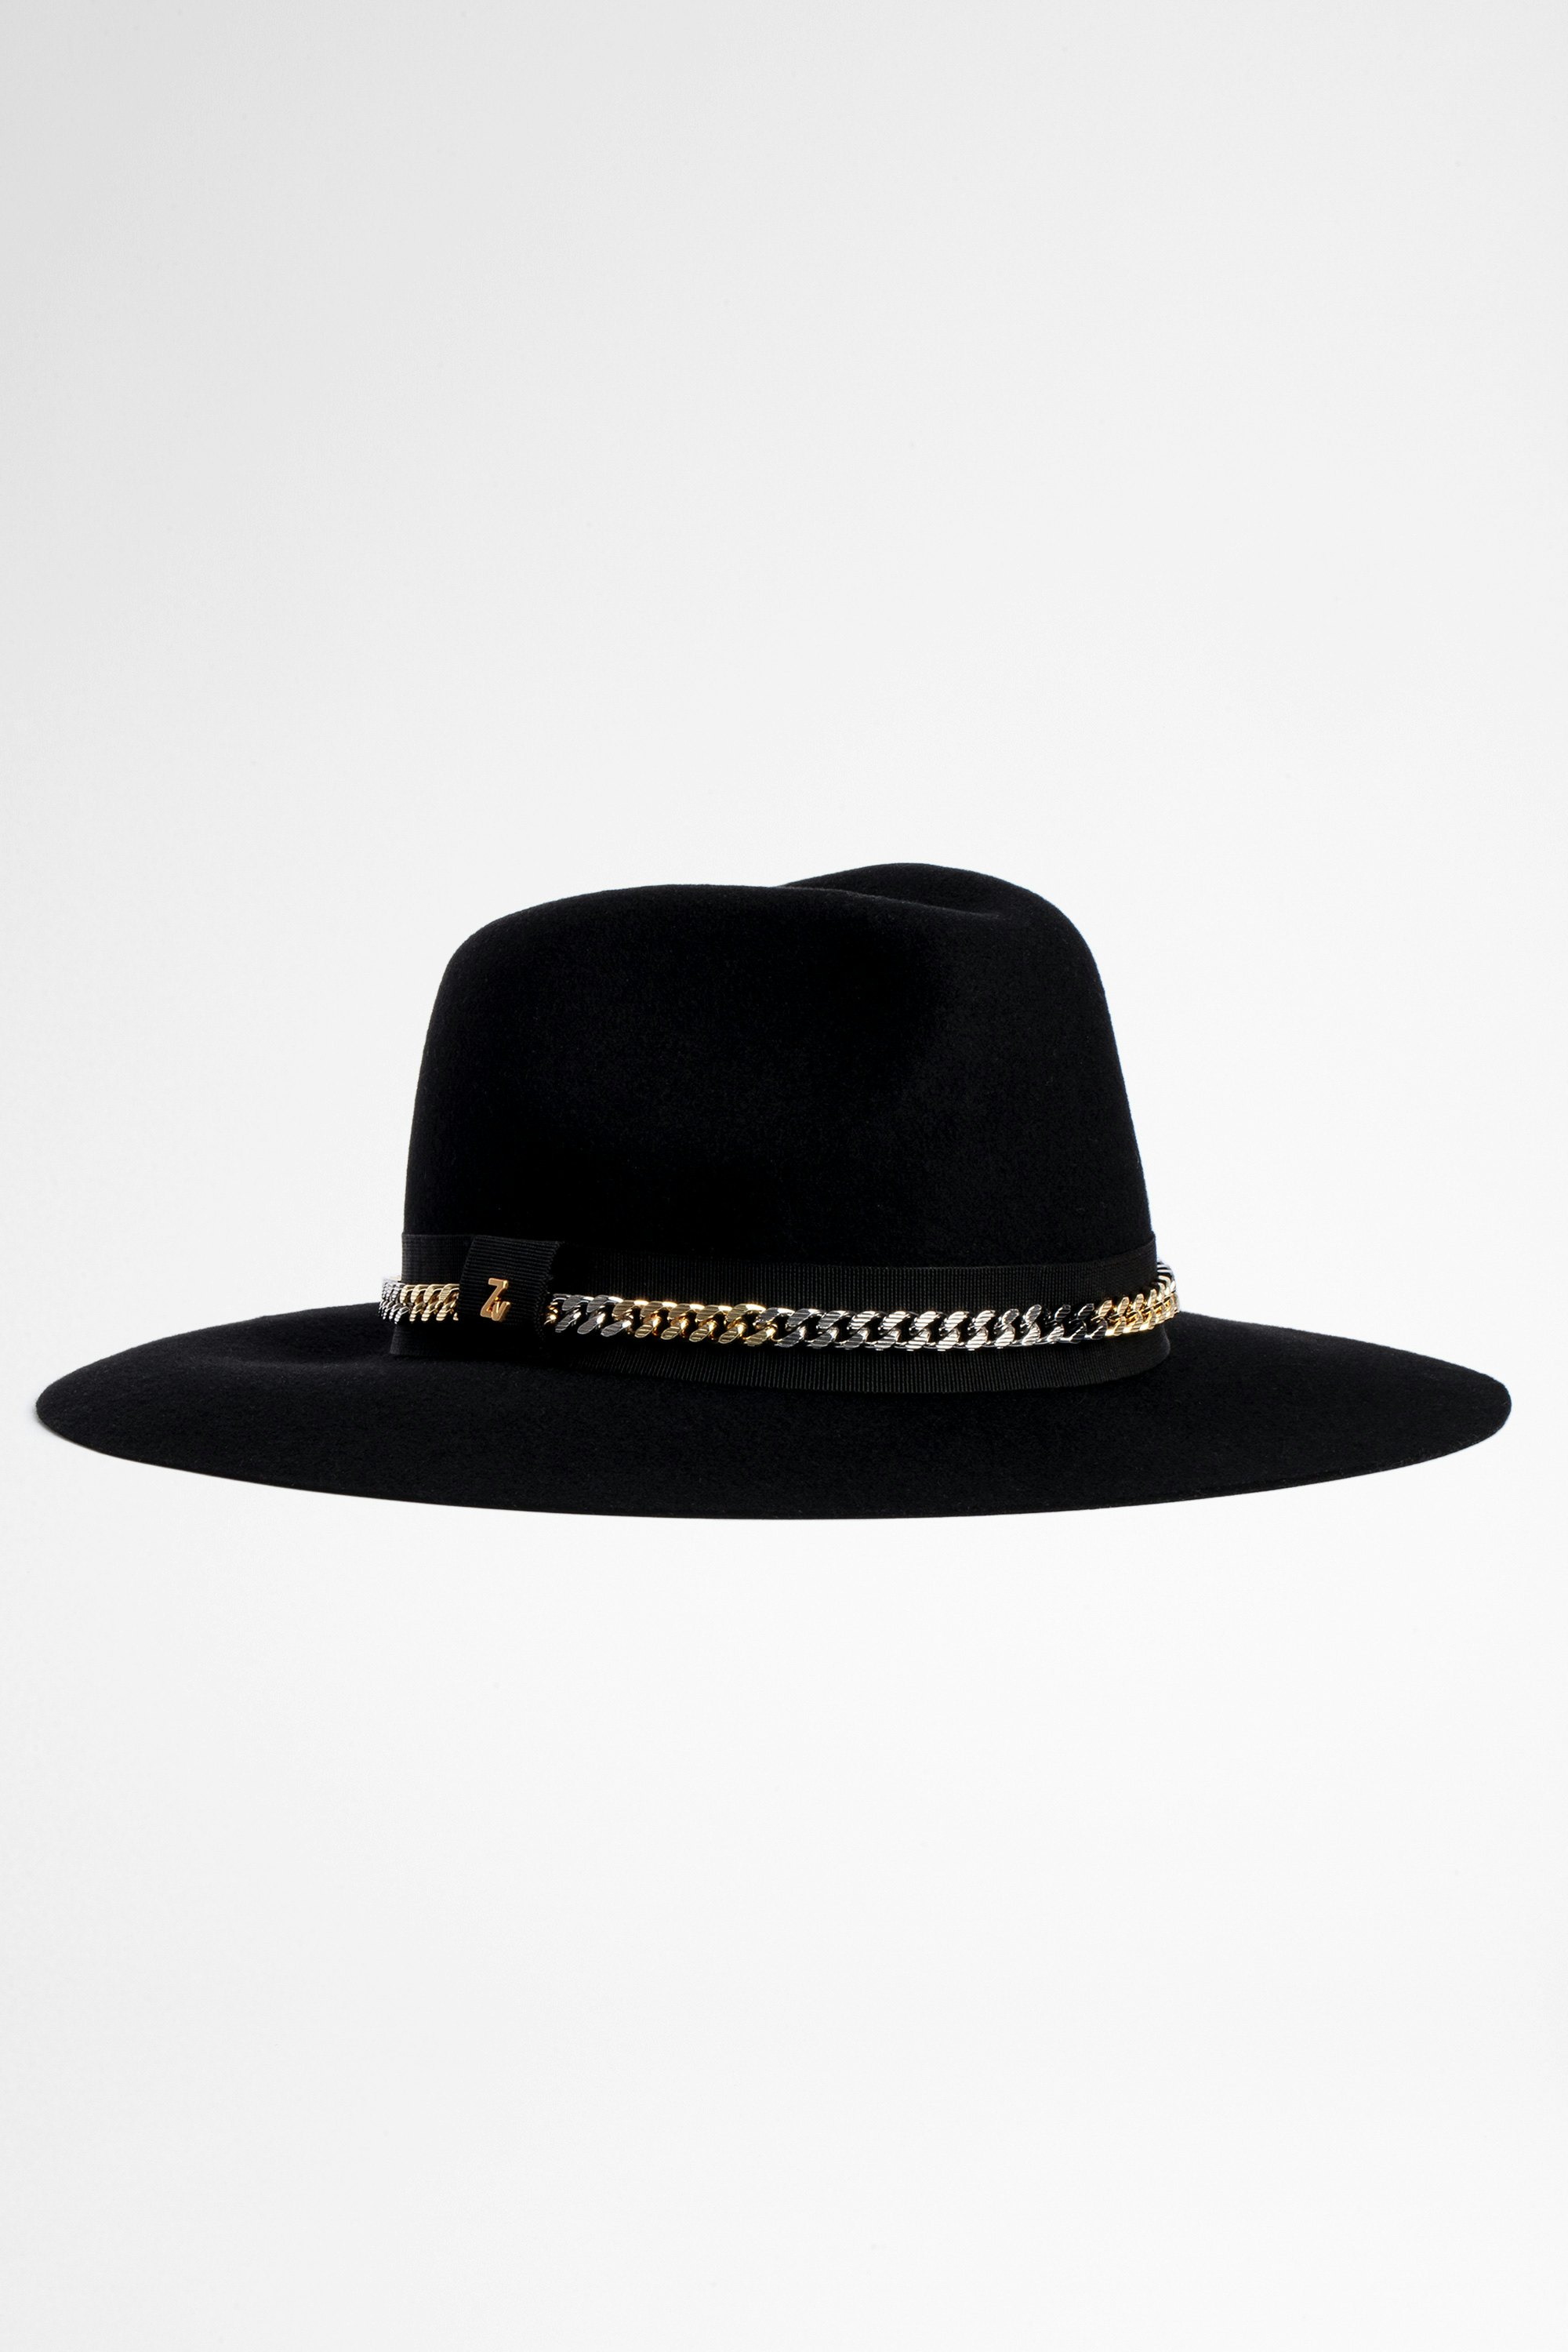 Amelia Chain 帽子 Women’s black wool hat with gold chain